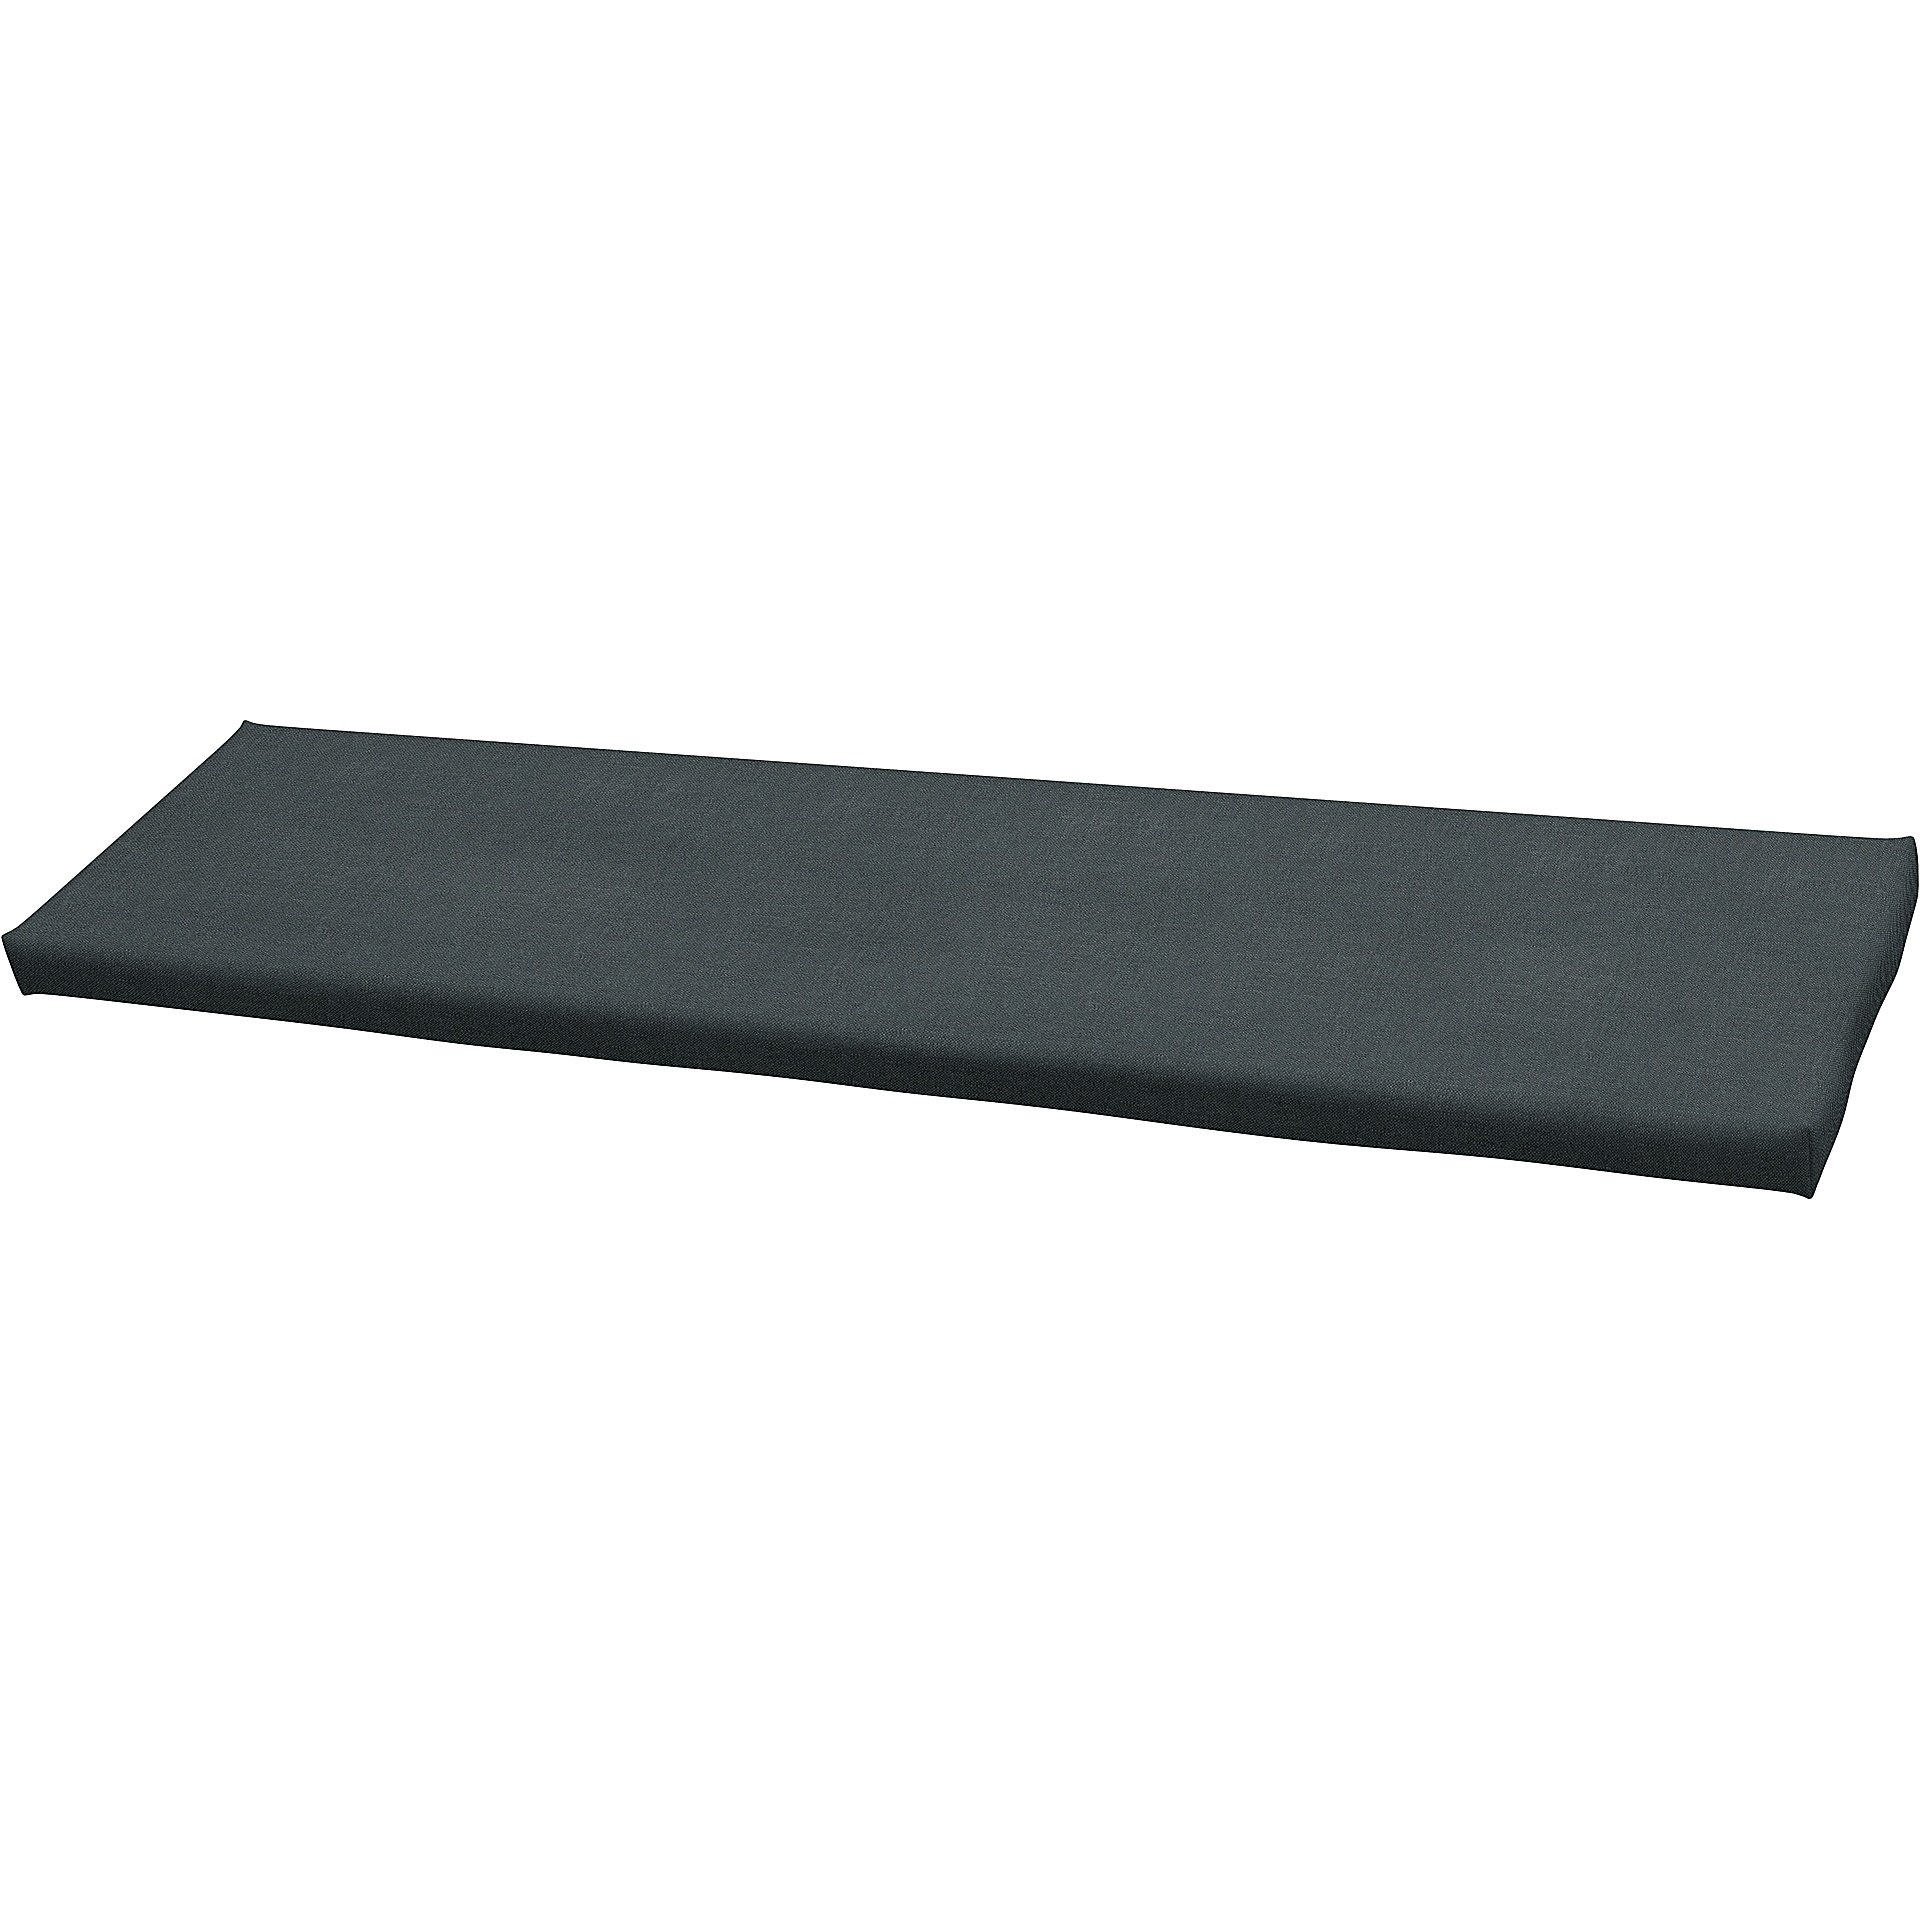 IKEA - Universal bench cushion cover 120x35x3,5 cm, Graphite Grey, Linen - Bemz